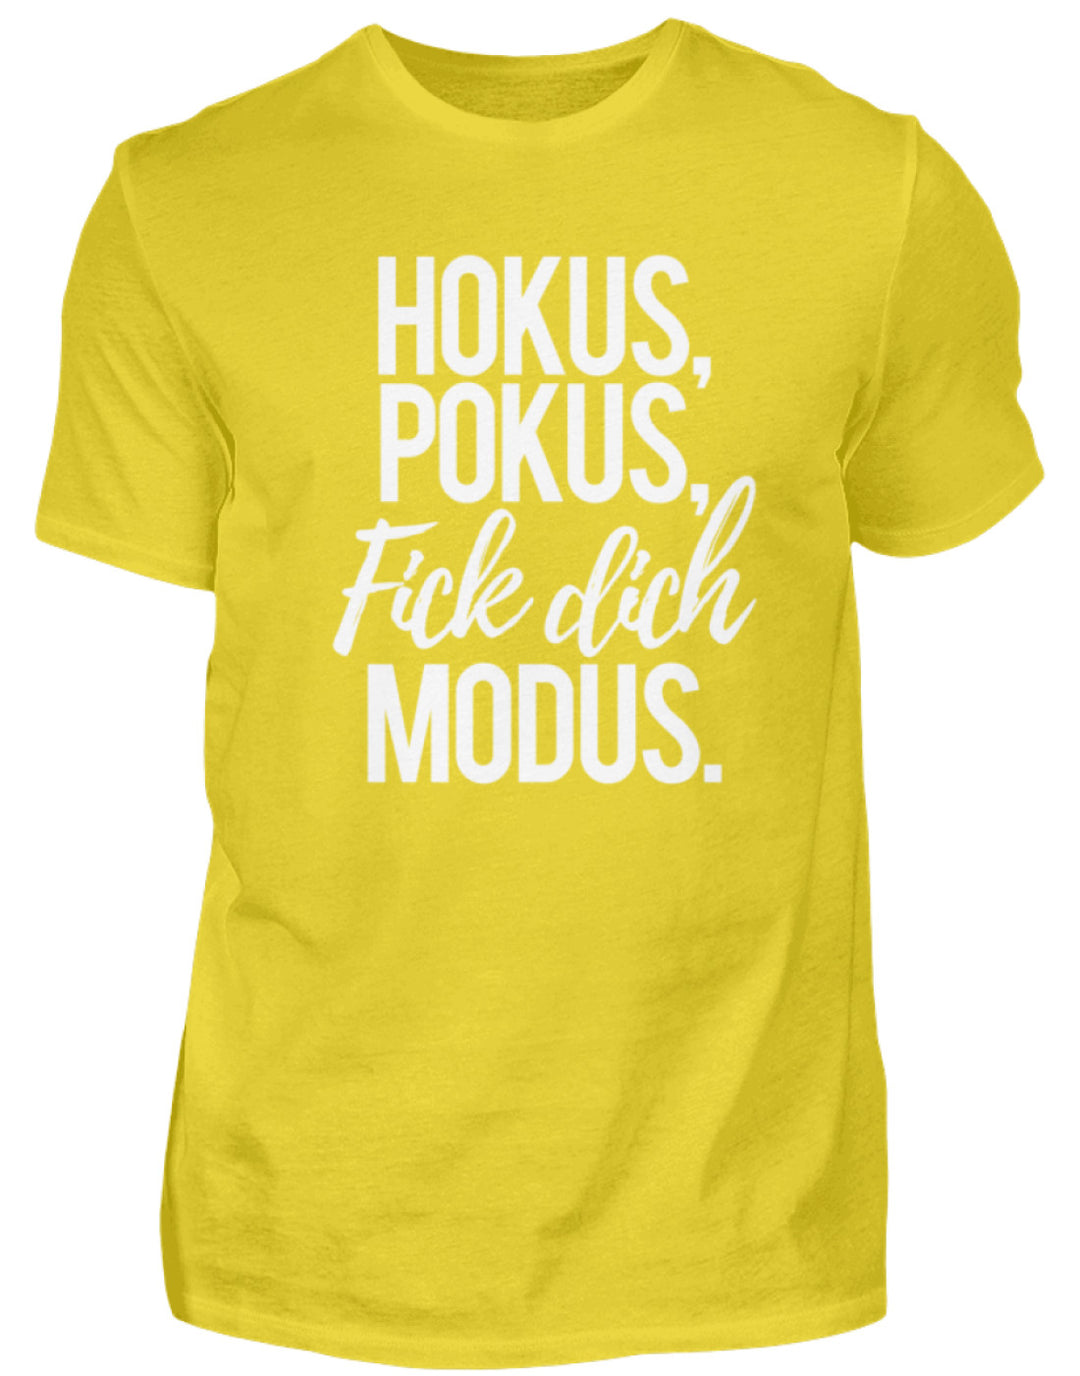 Hokus Pokus F*** **ch Modus  - Herren Shirt - Words on Shirts